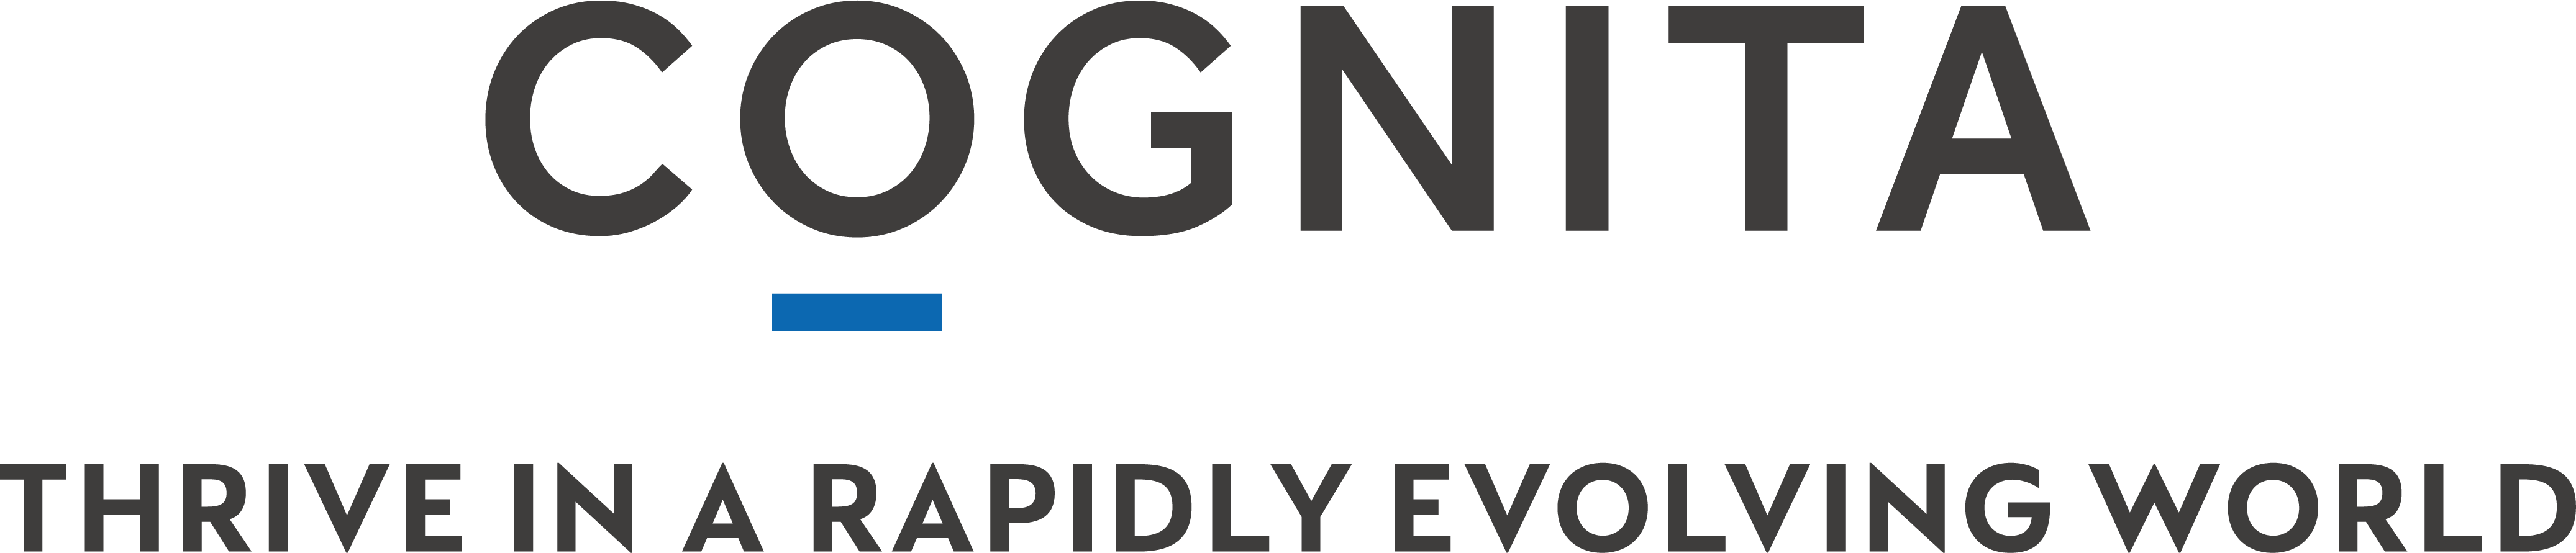 Cognita Logo with Purpose REVERSE